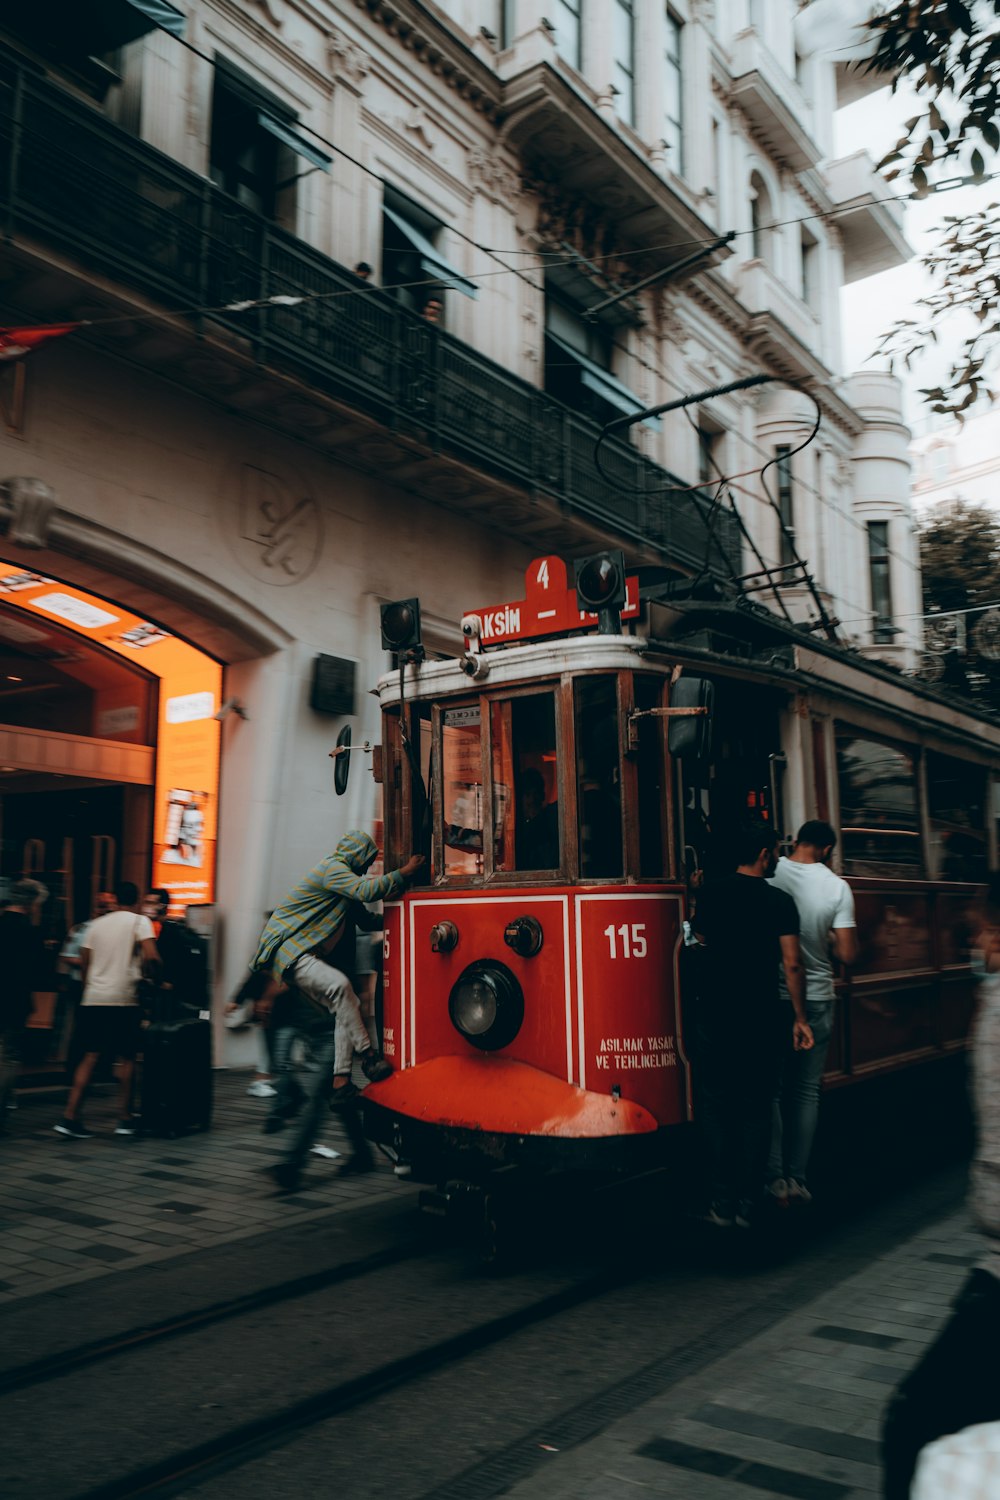 a red trolley car on a city street